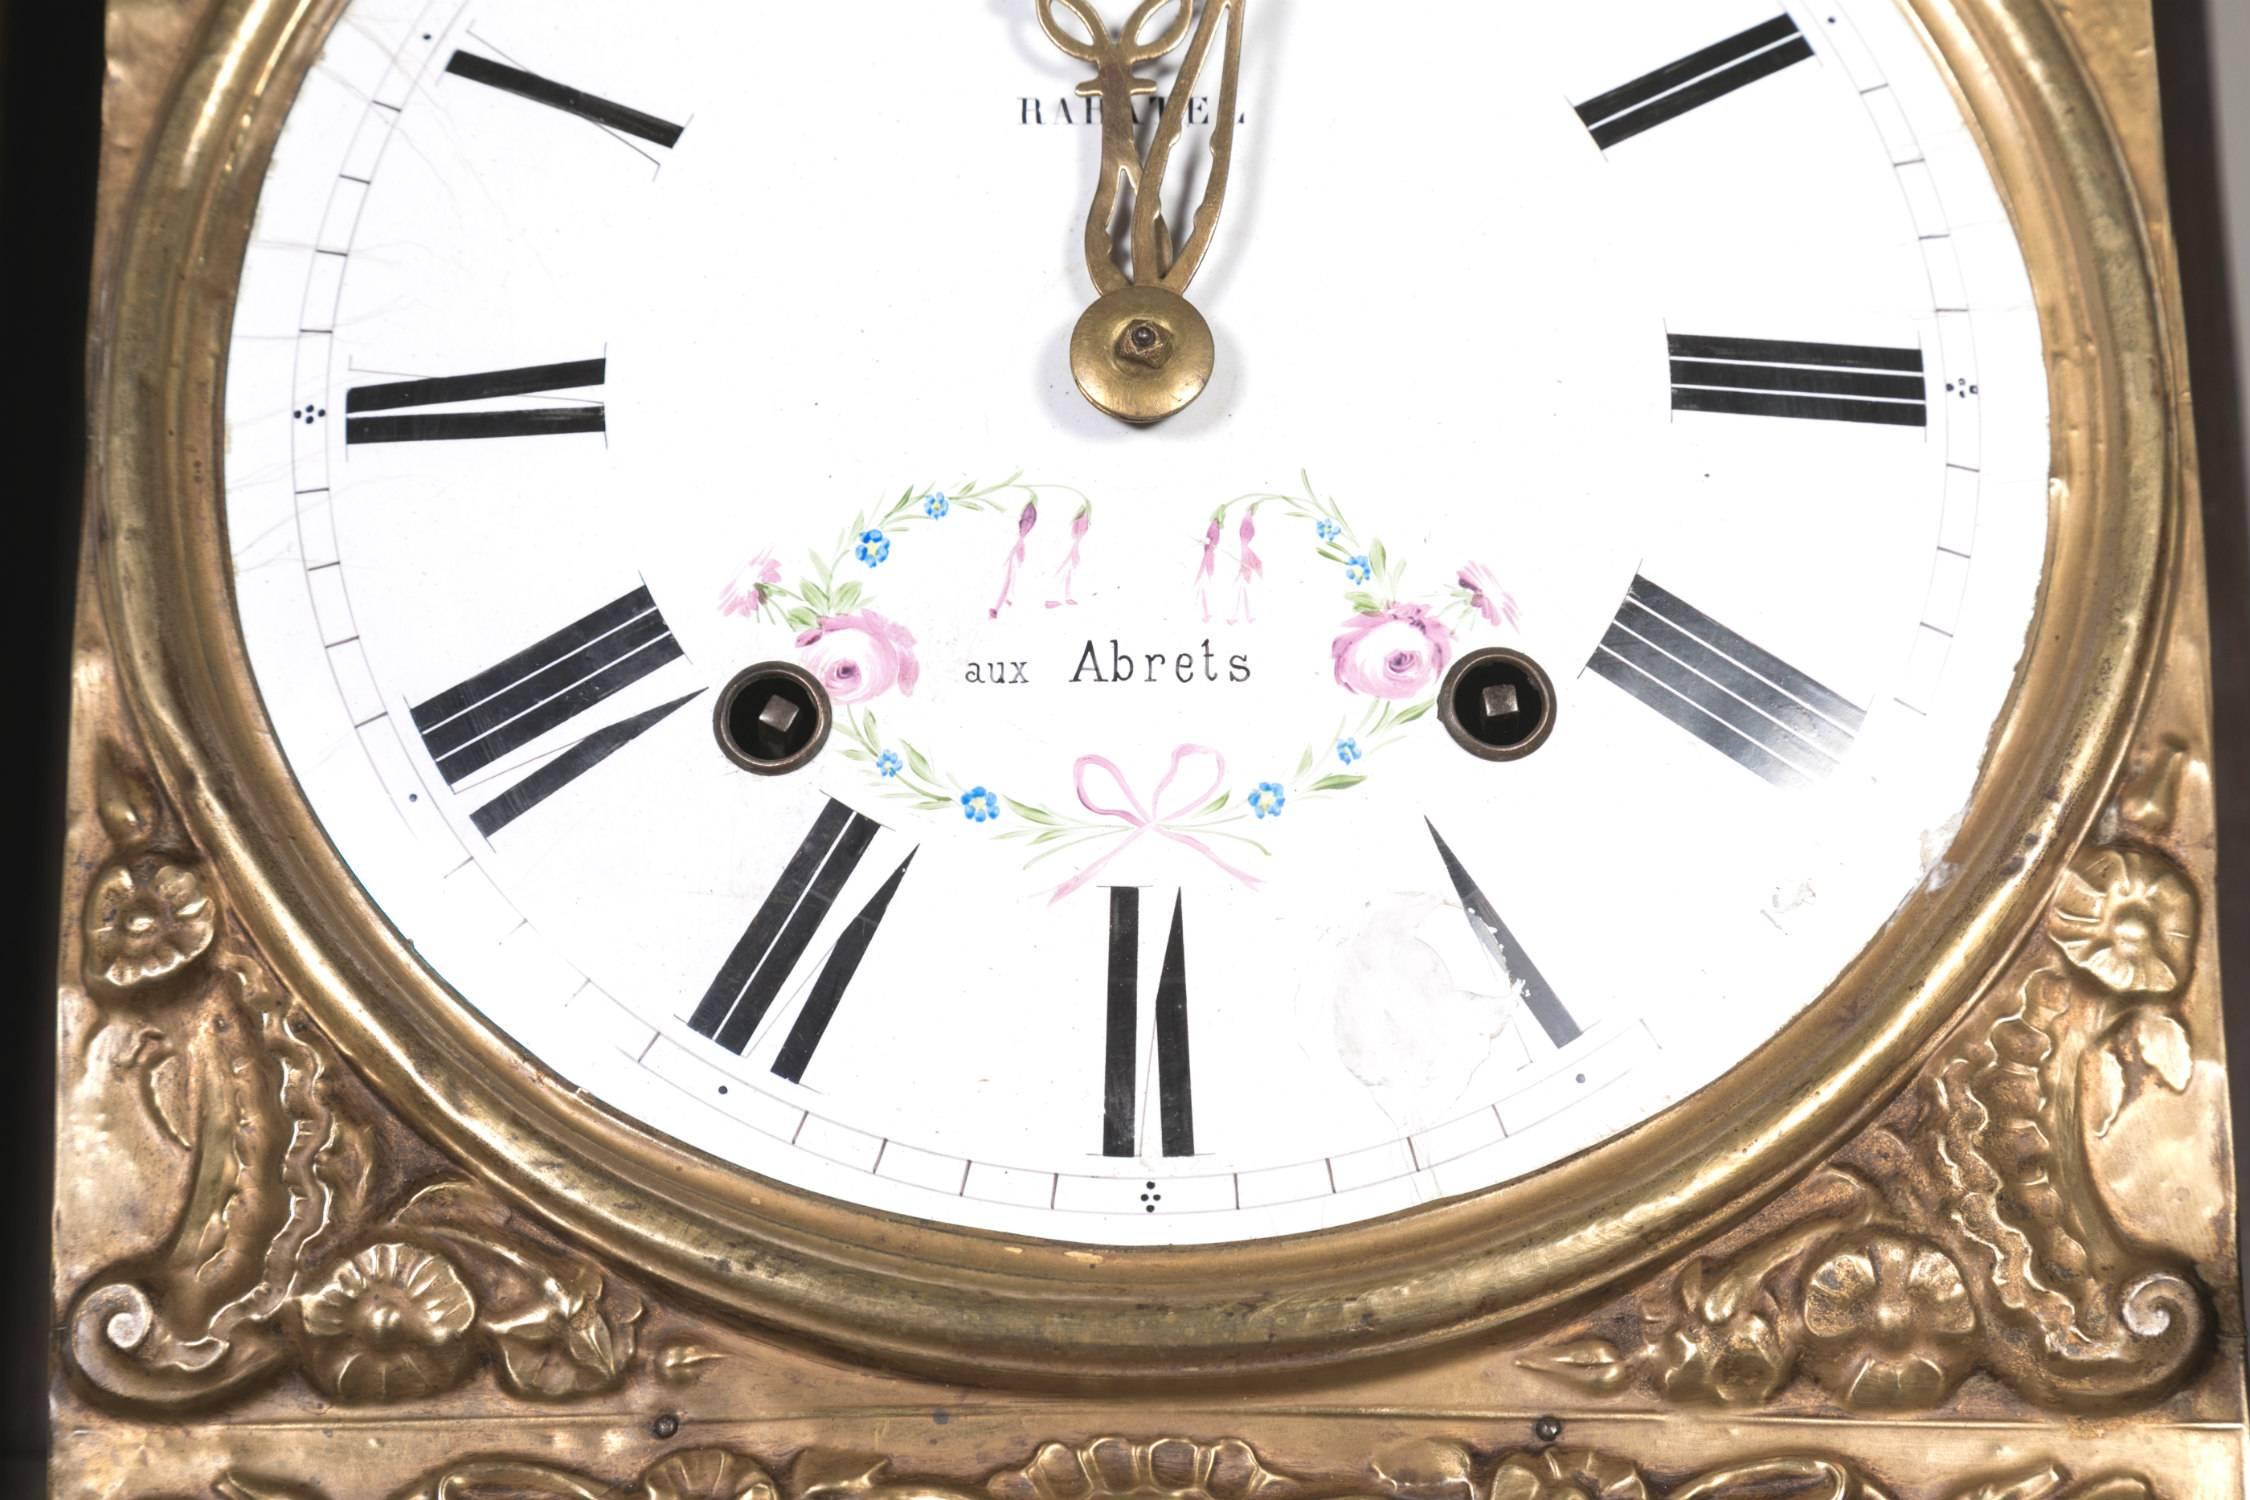 comtoise clock for sale